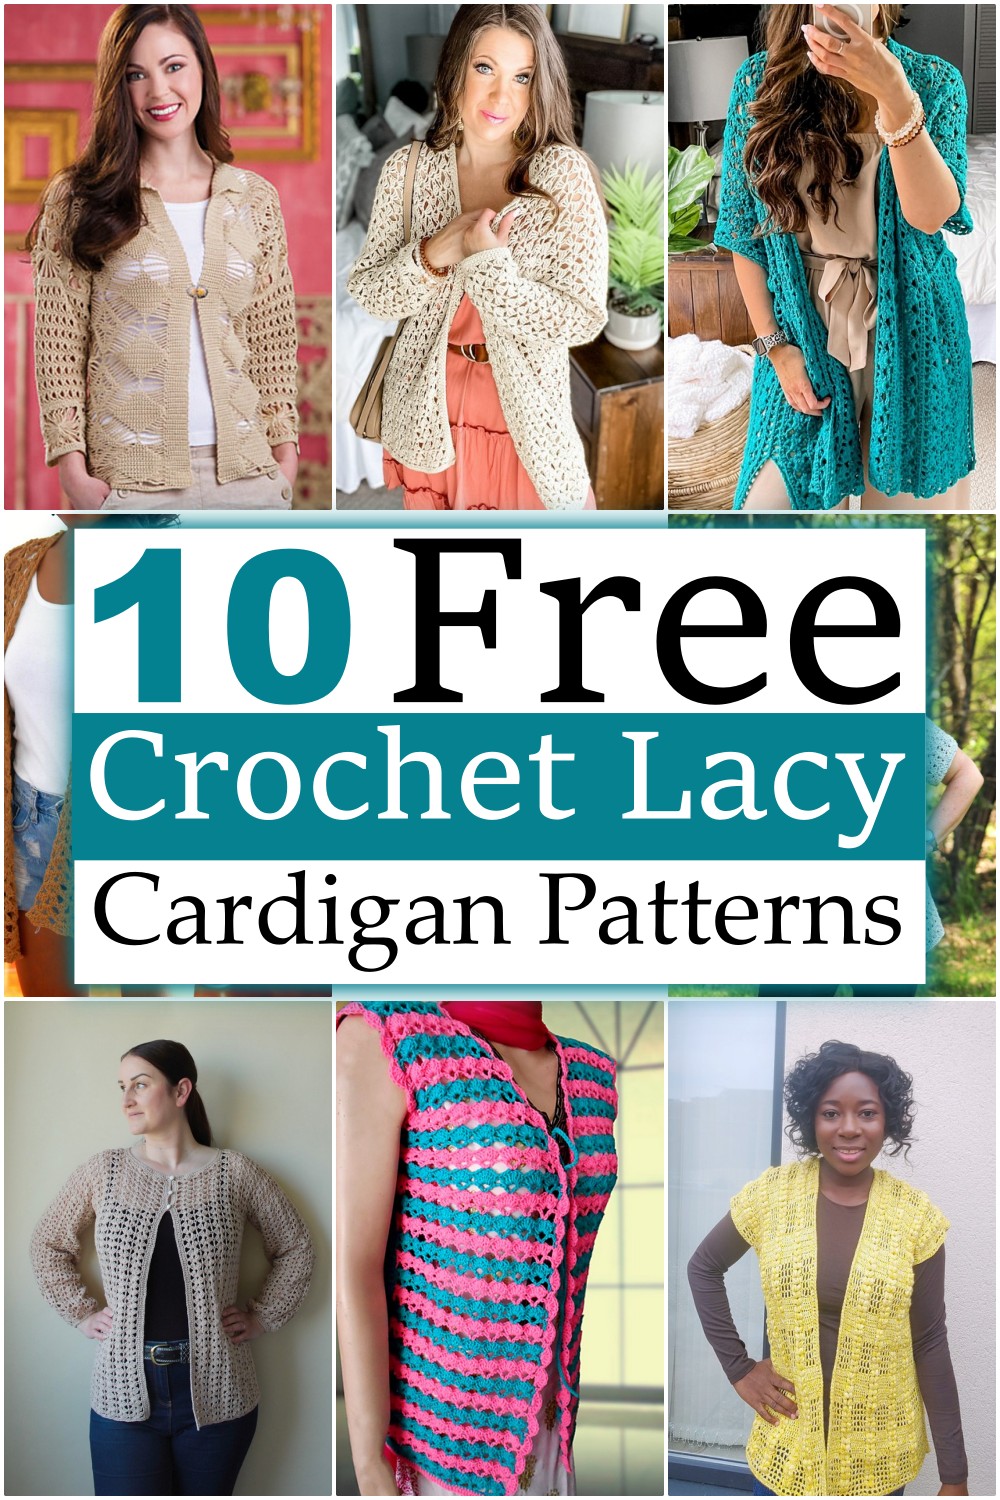 Crochet Lacy Cardigan Patterns